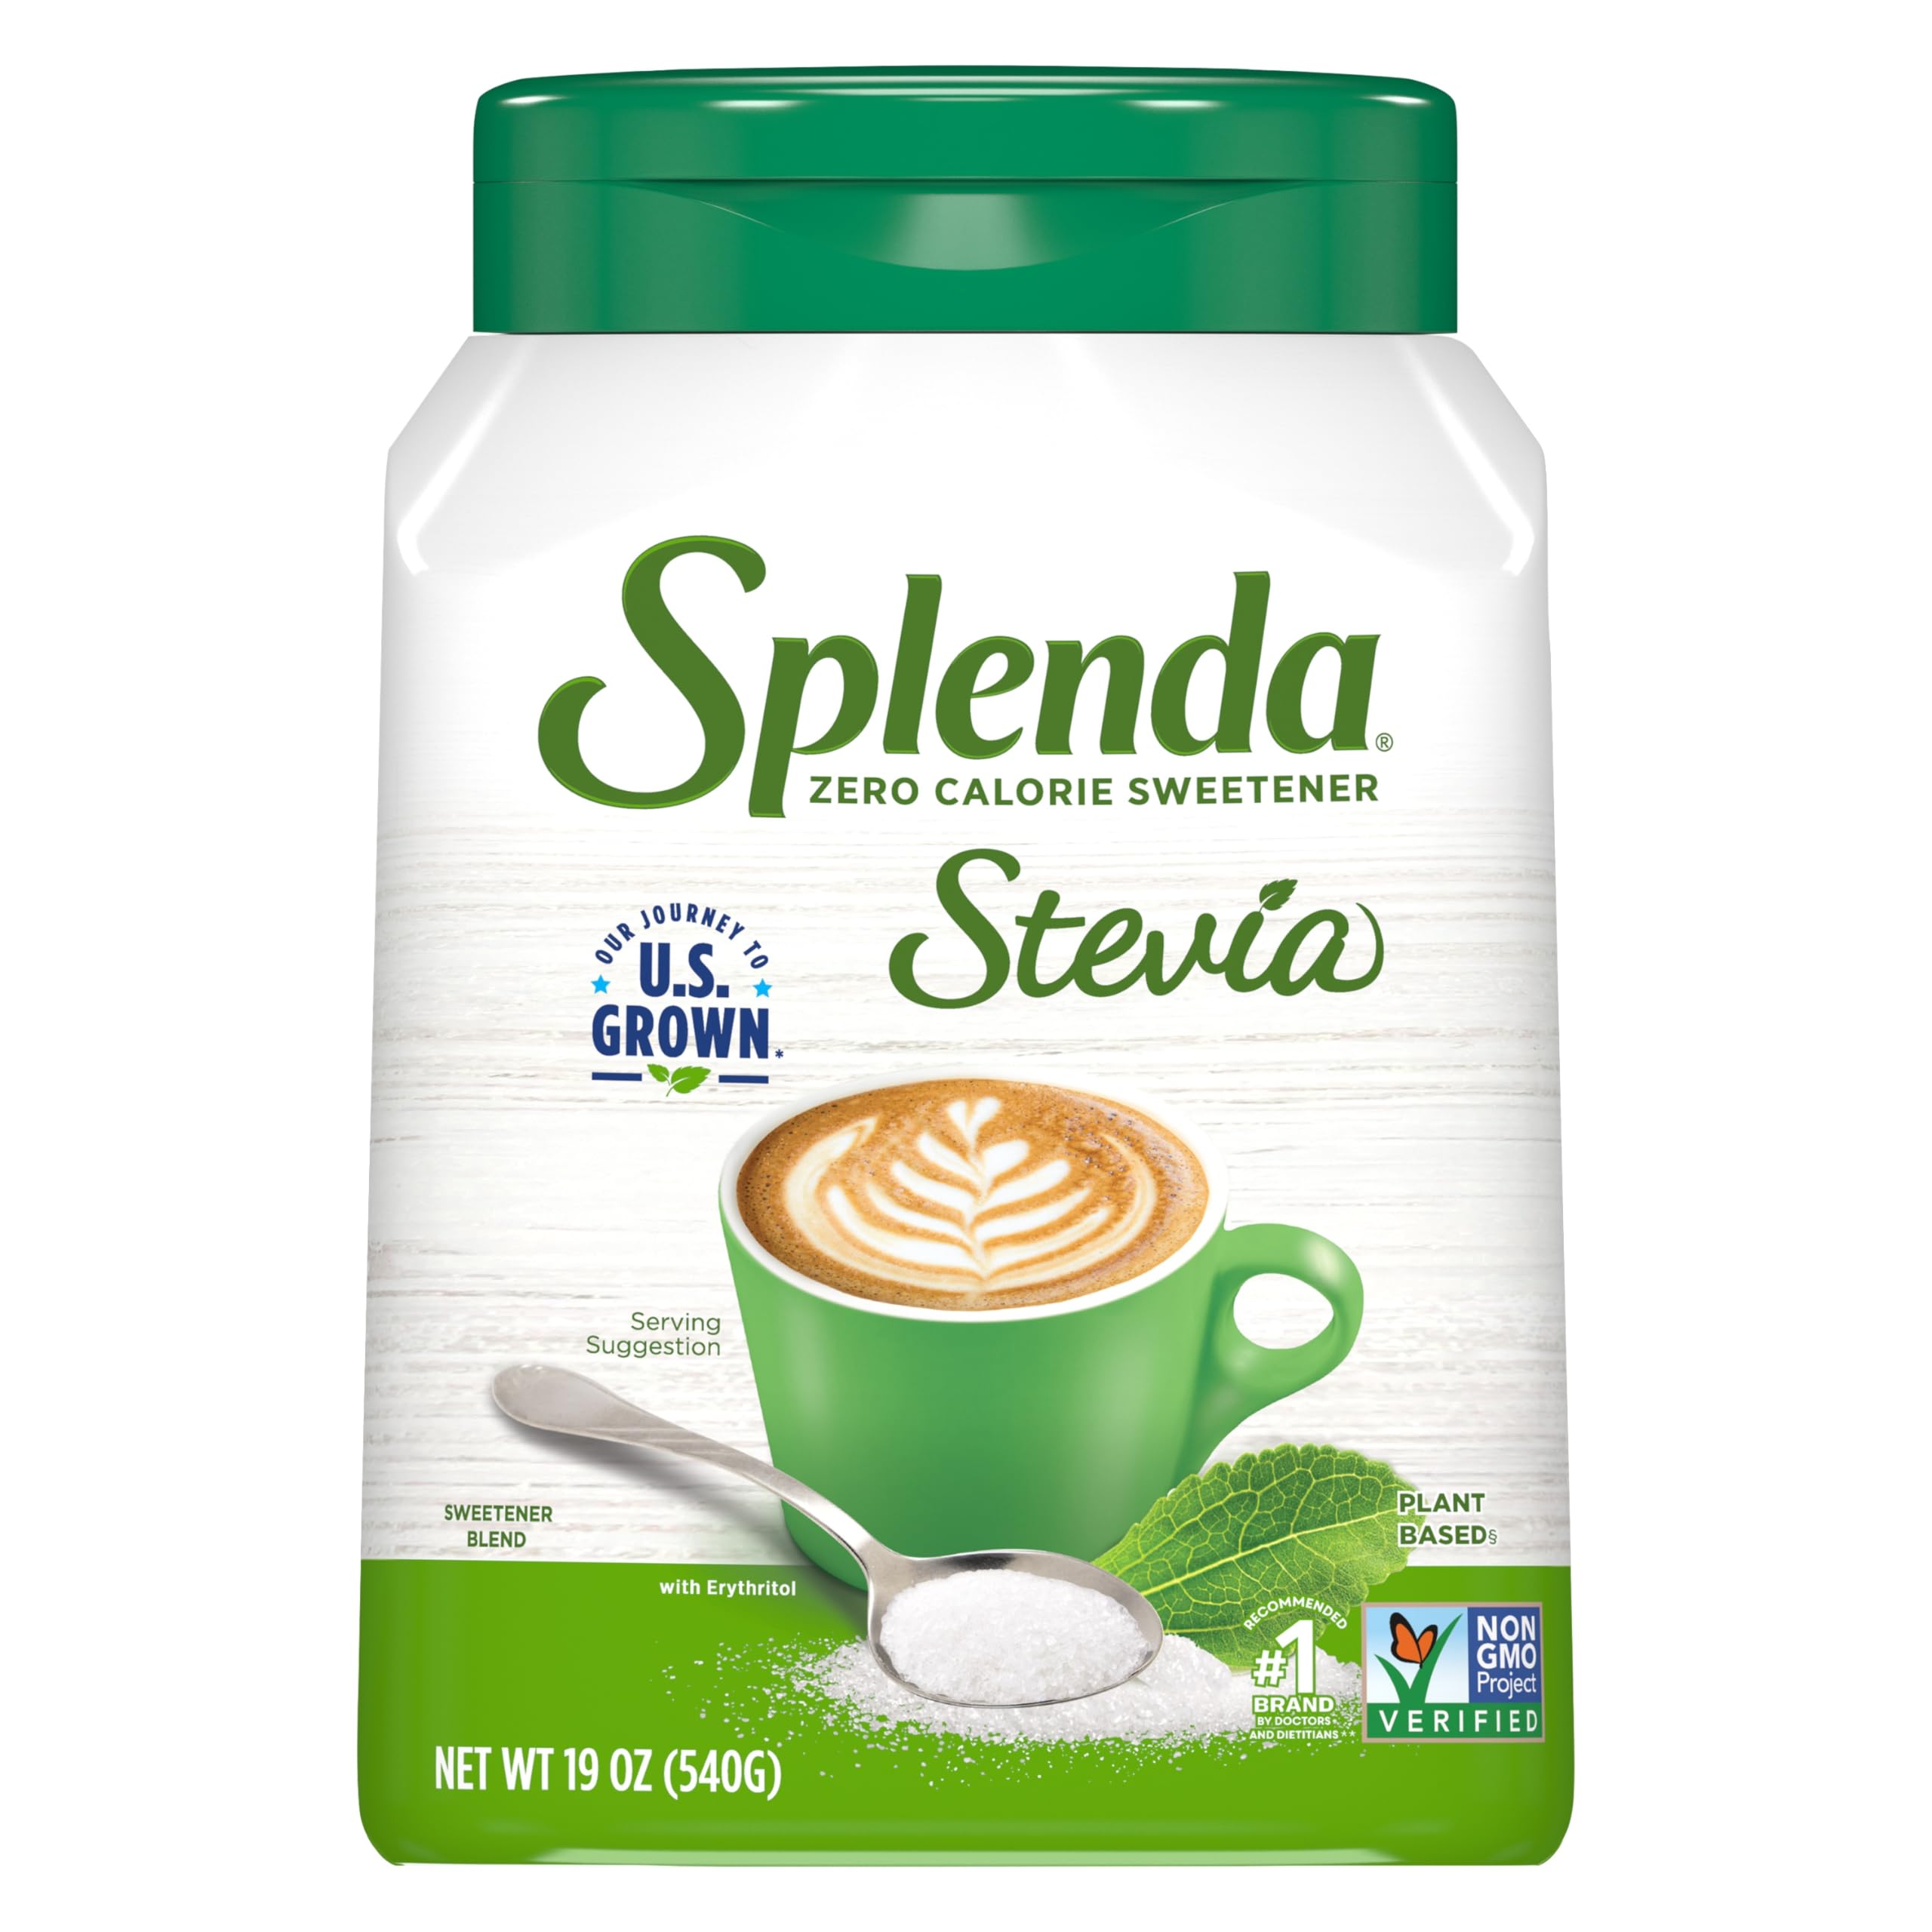 19-Oz Splenda Naturals Stevia Zero Calorie Sweetener $5.49 + Free Shipping w/ Prime or on $35+